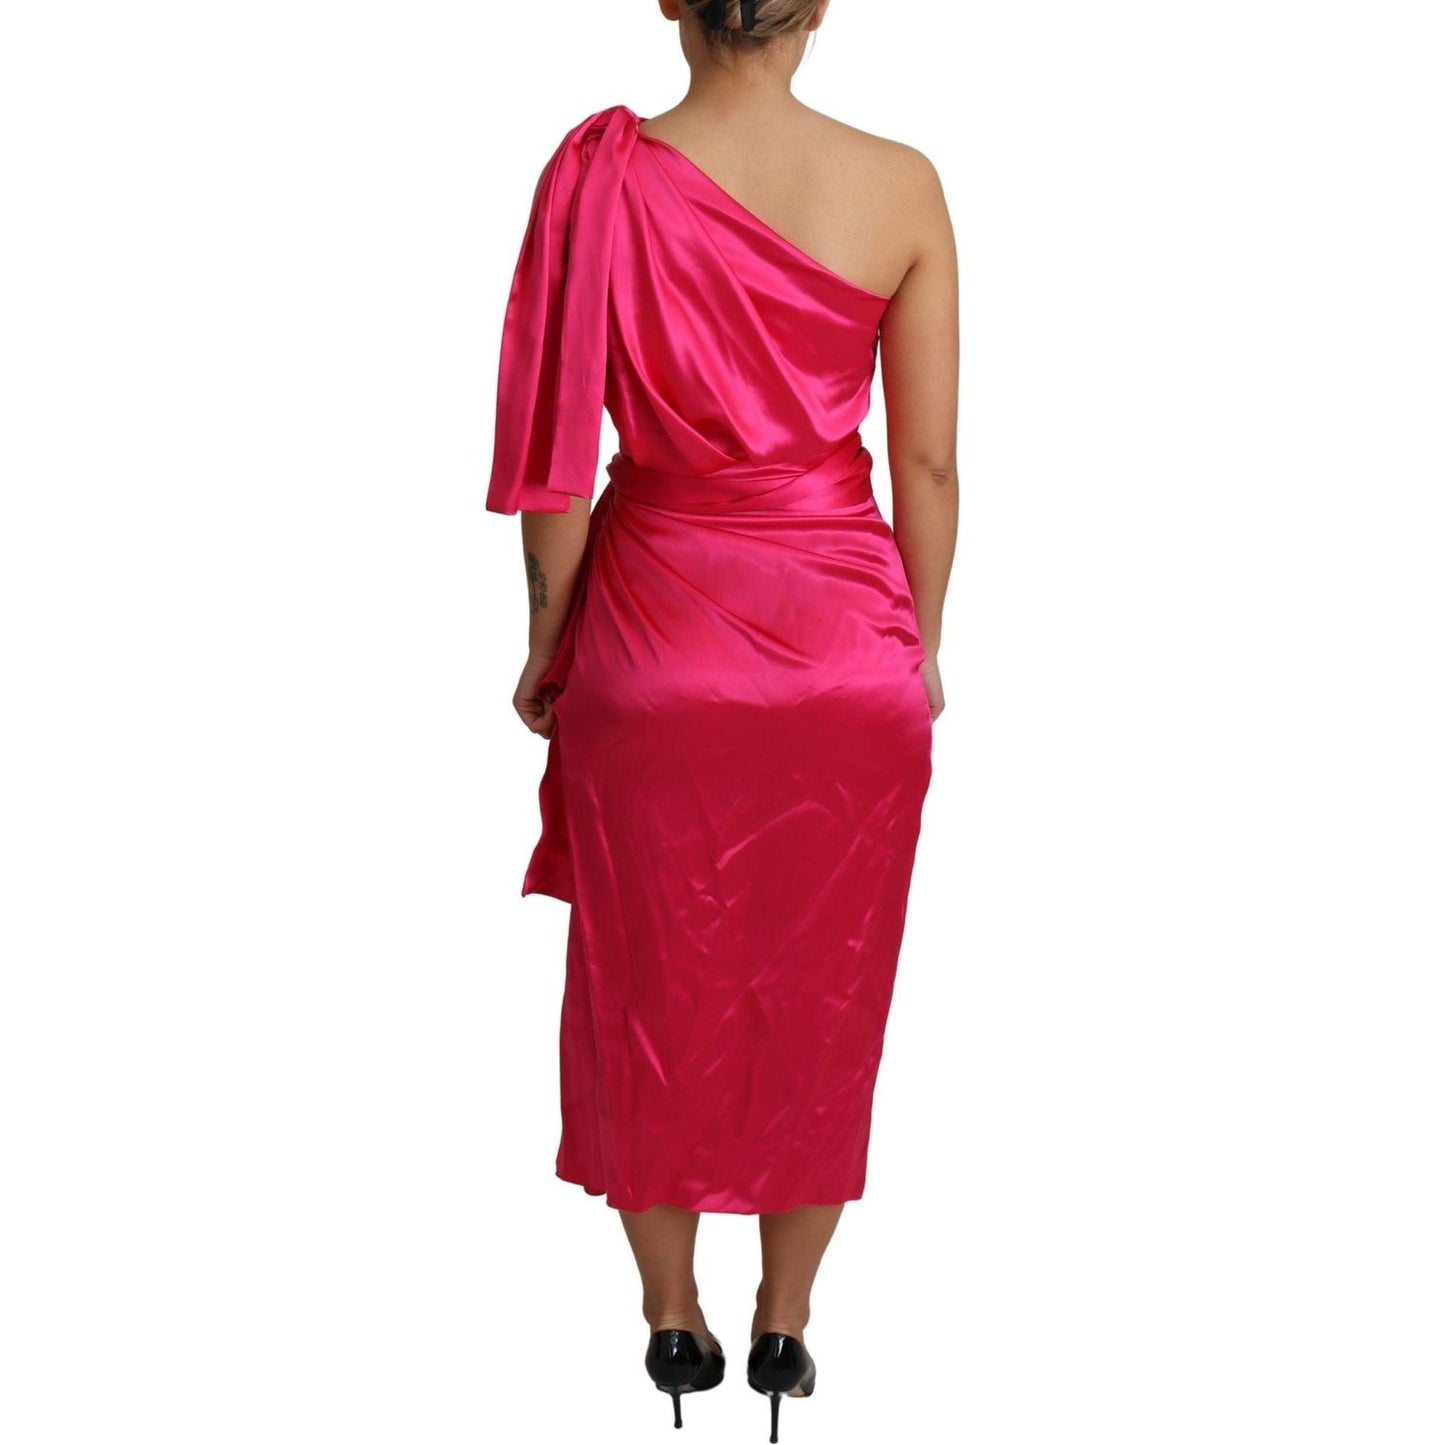 Dolce & Gabbana Elegant Fuchsia Silk One-Shoulder Wrap Dress dress-pink-fitted-cut-one-shoulder-midi-dress